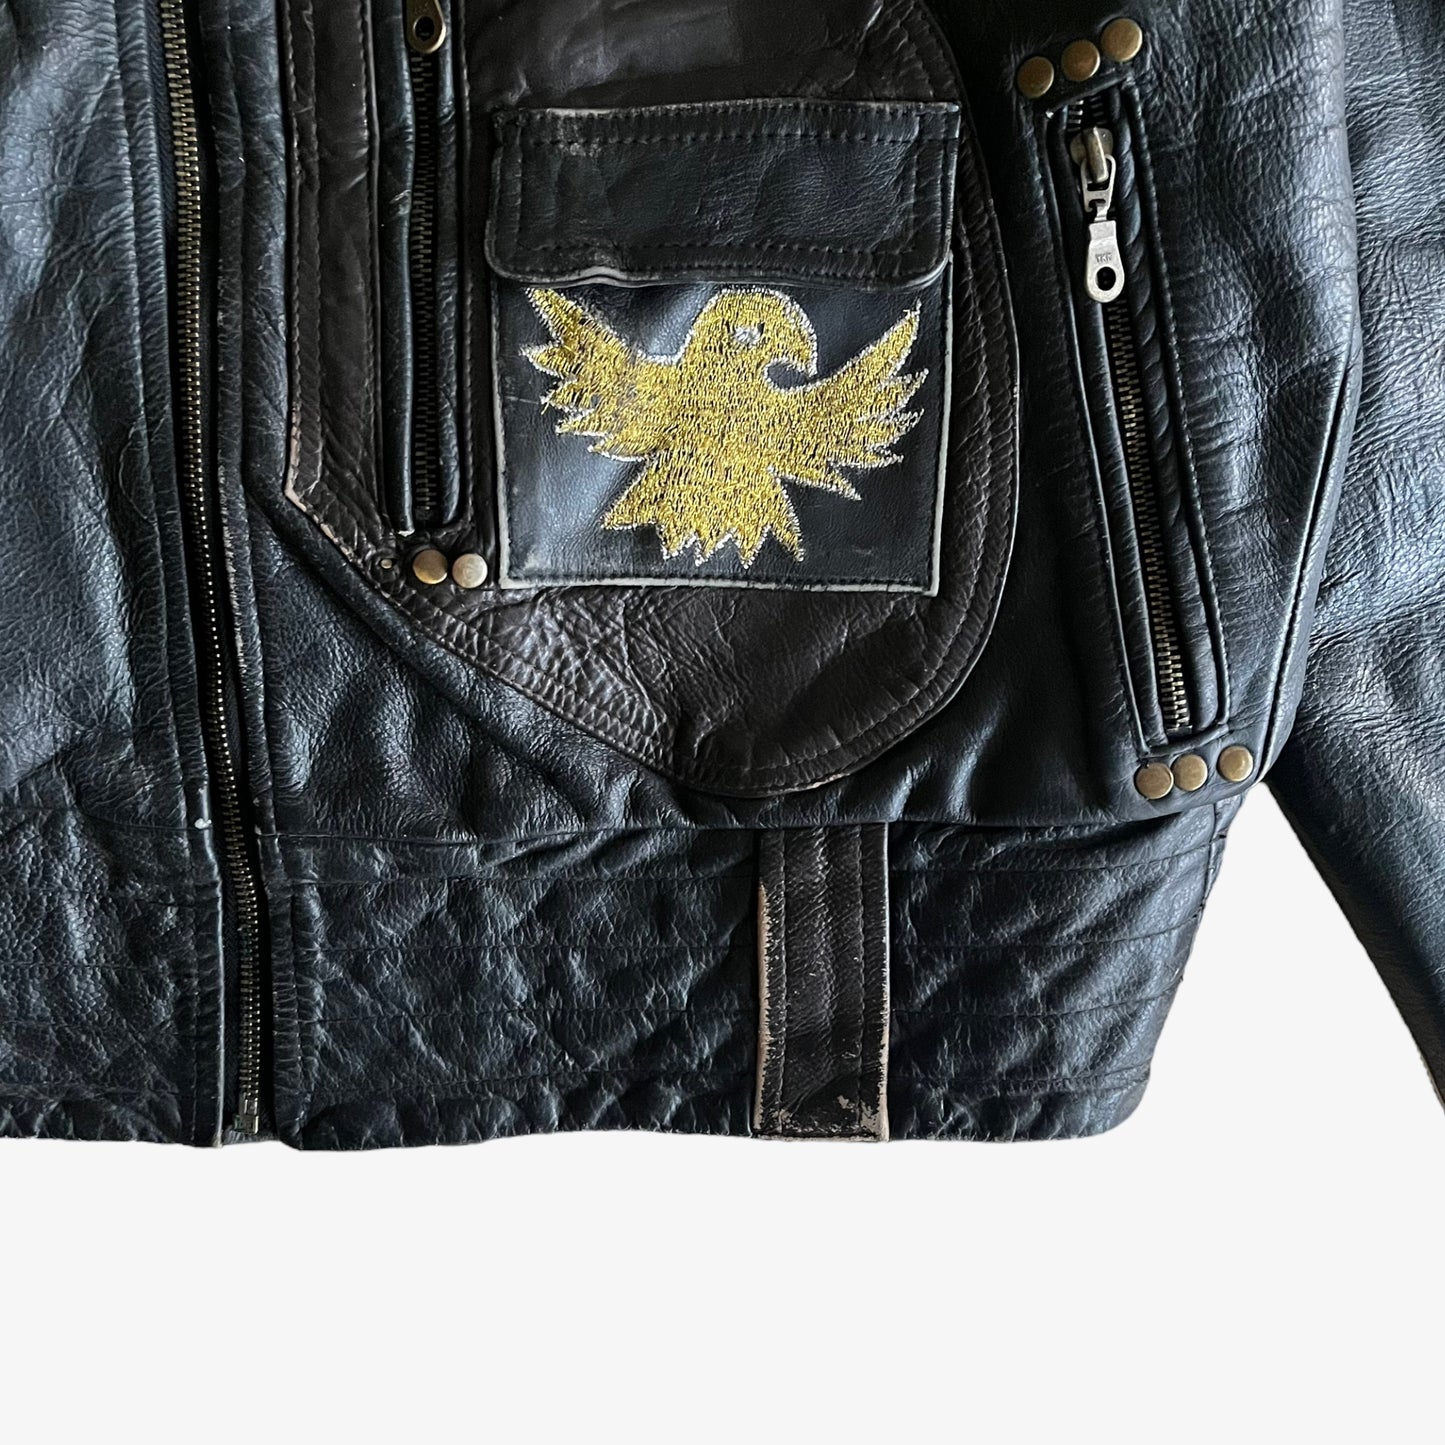 Vintage 90s Leather Biker Jacket With Embroidered Eagle Golden - Casspios Dream